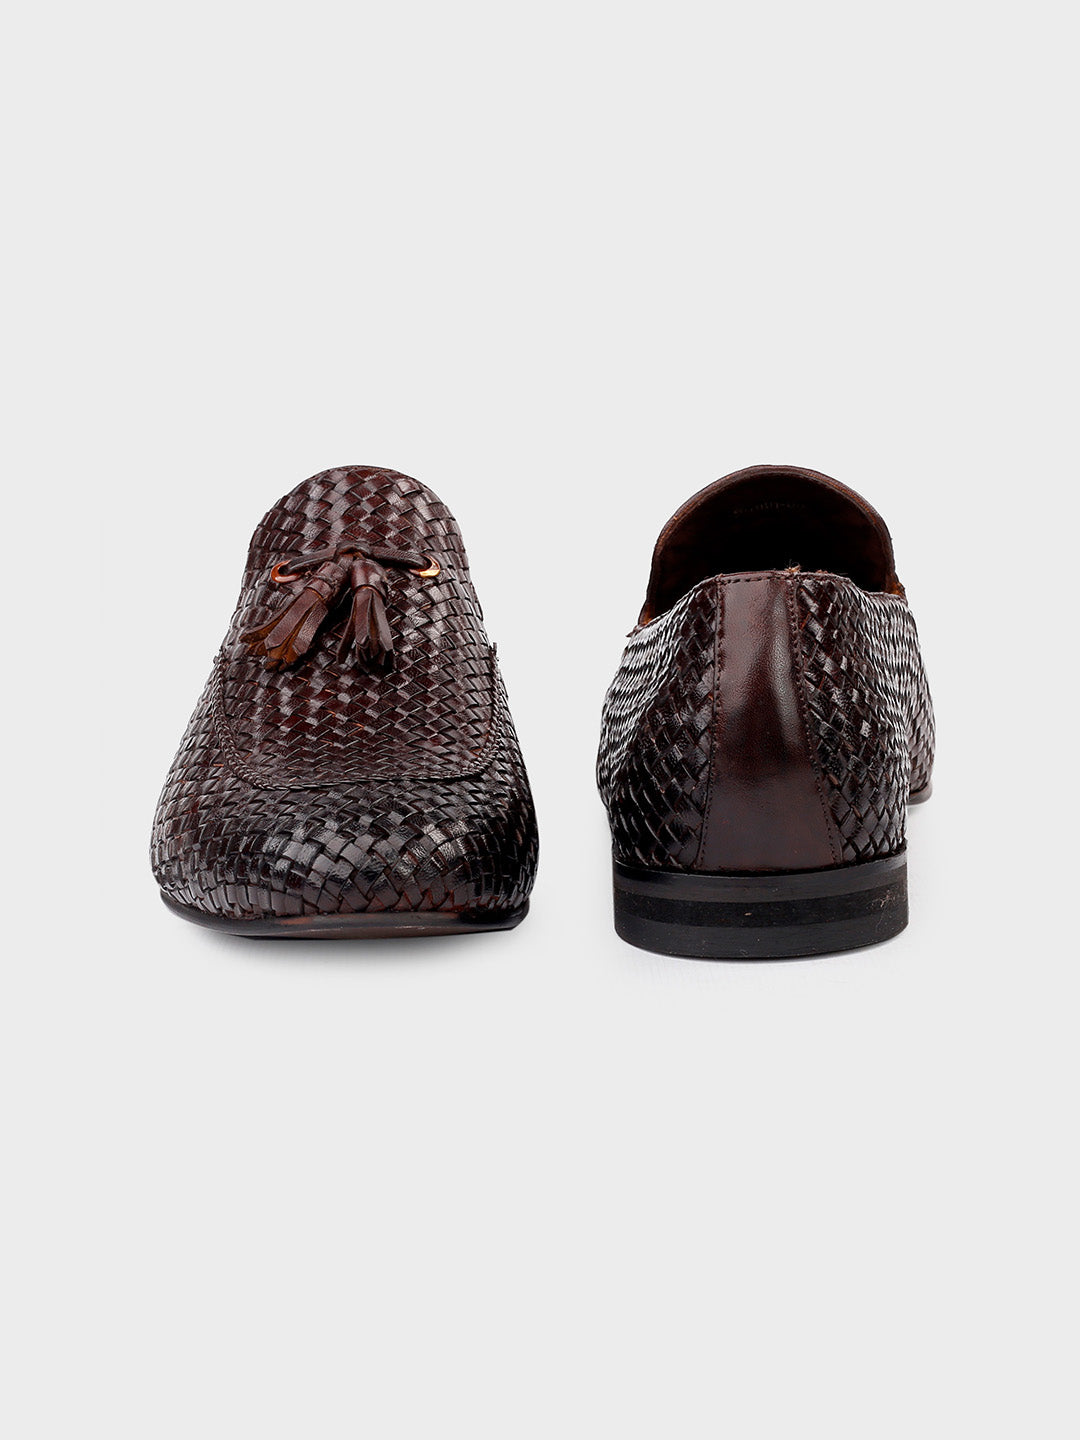 Brown Leather Men's Slip-On Tassel Shoes